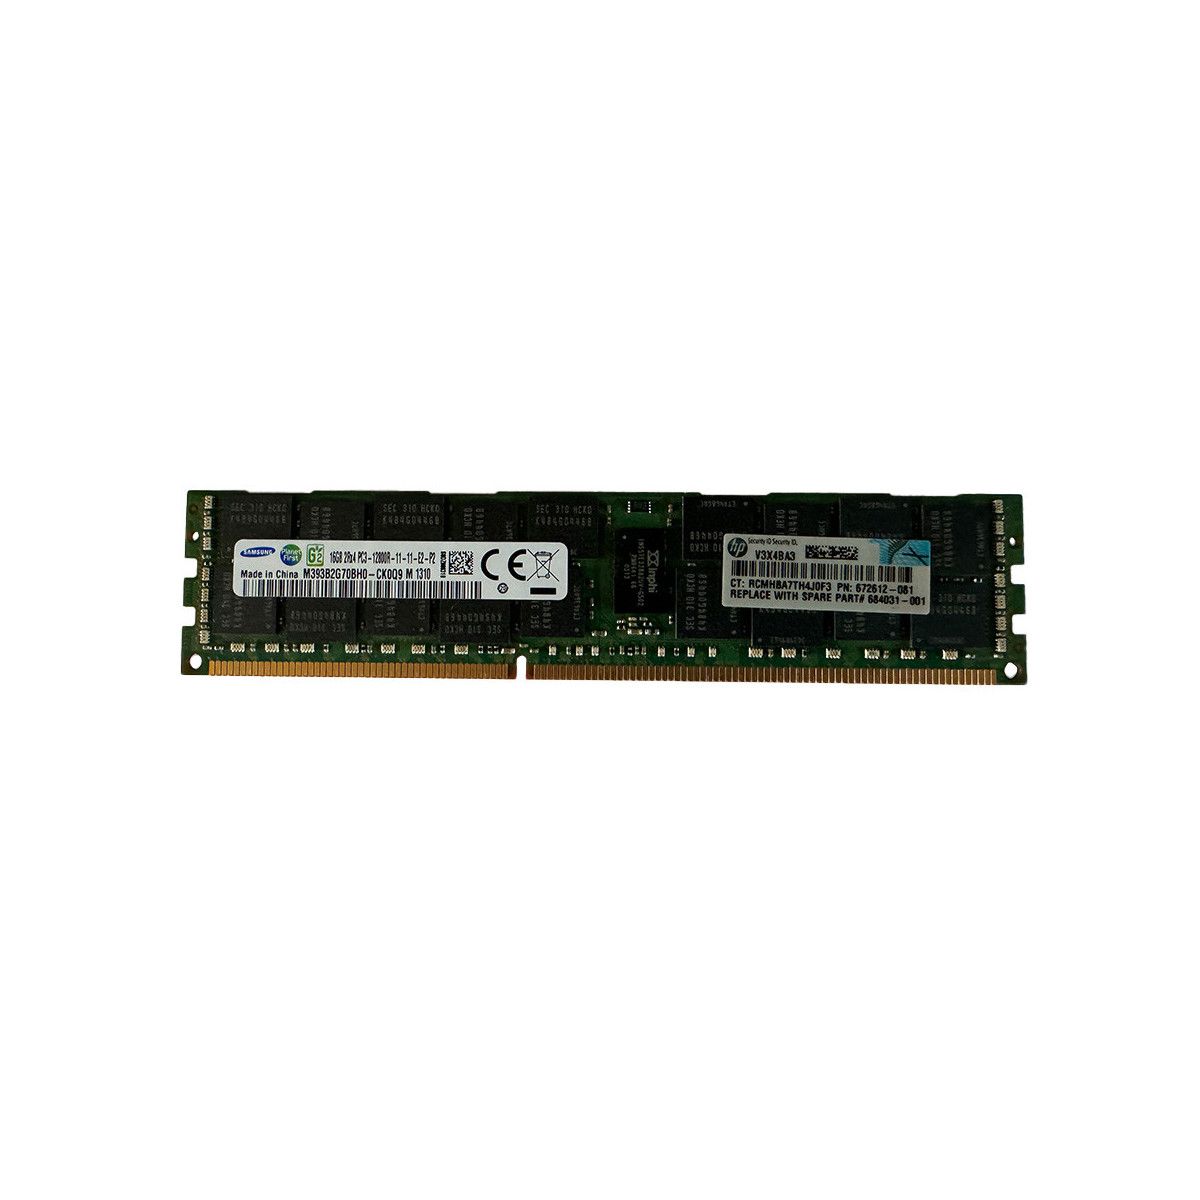 672631-B21-MS - Memstar 1x 16GB DDR3-1600 RDIMM PC3-12800R - Memorie OEM compatibilă Mem-Star 1 - Memstar 